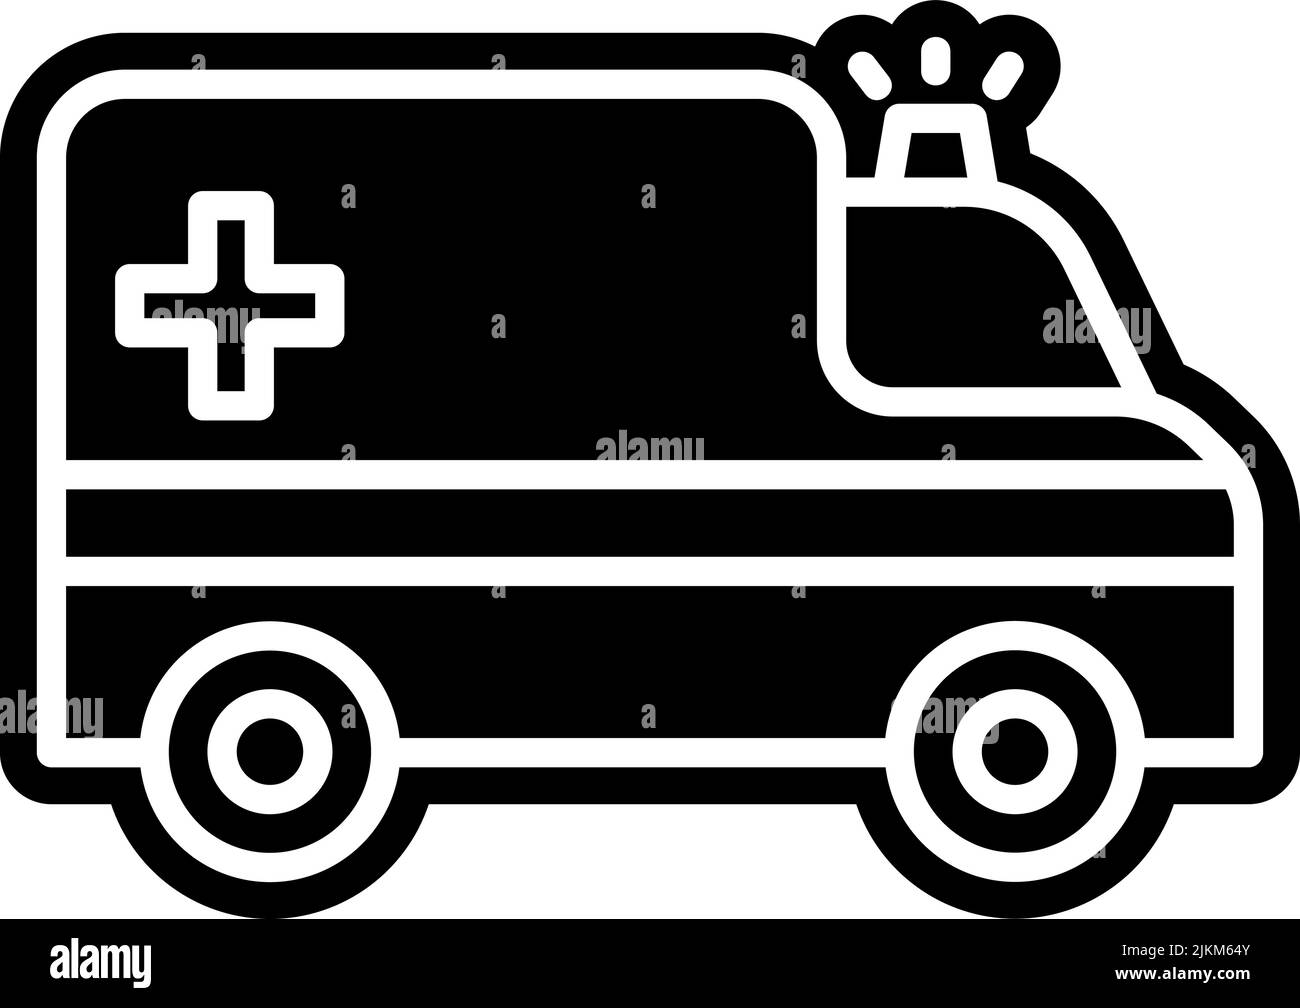 ambulance icon black vector illustration. Stock Vector